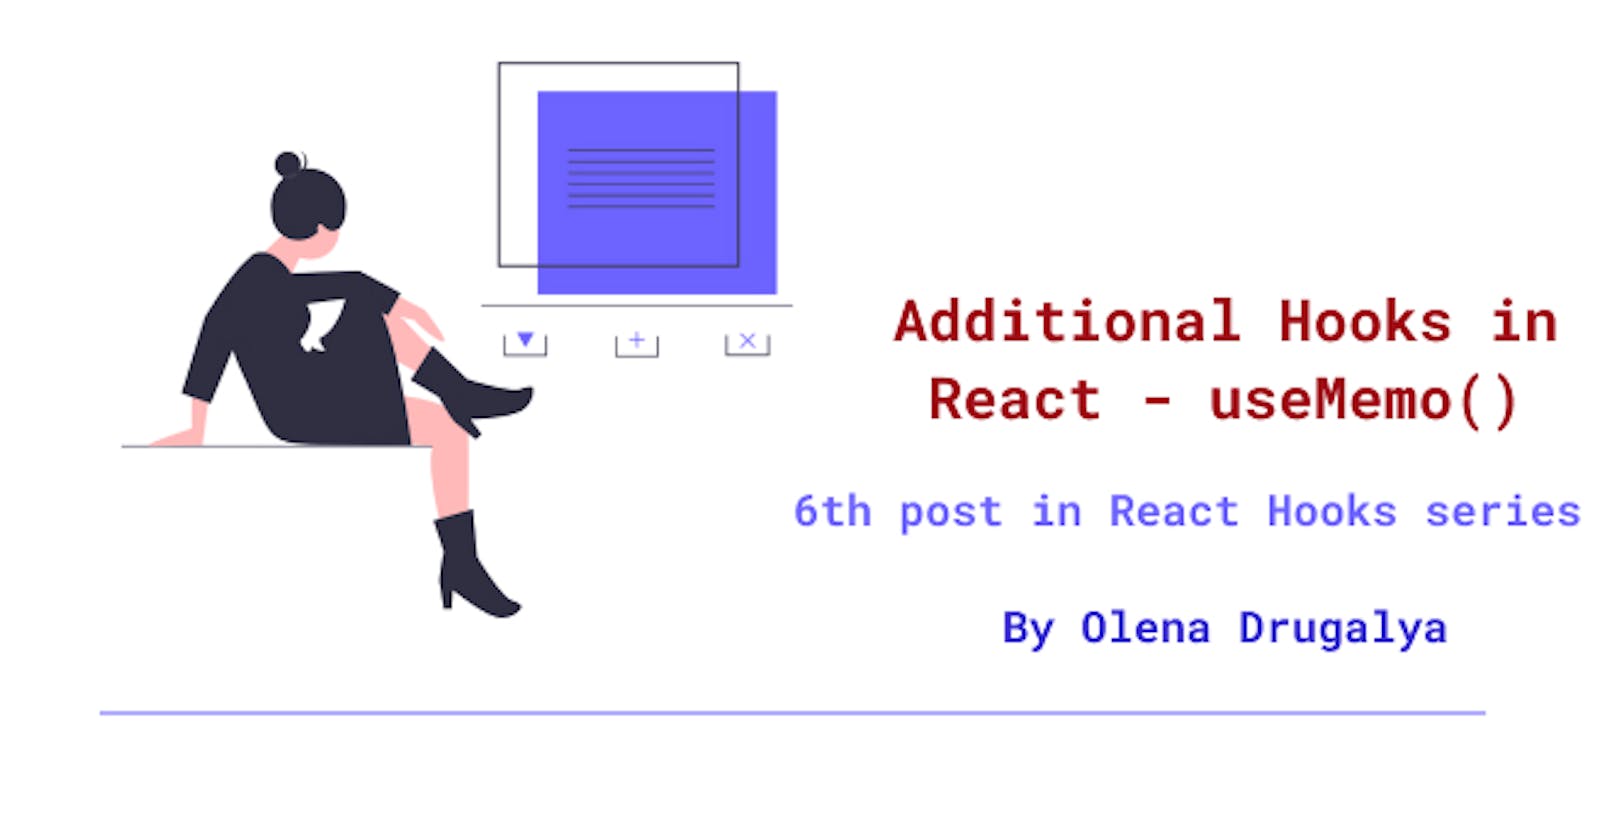 Additional Hooks in React - useMemo()